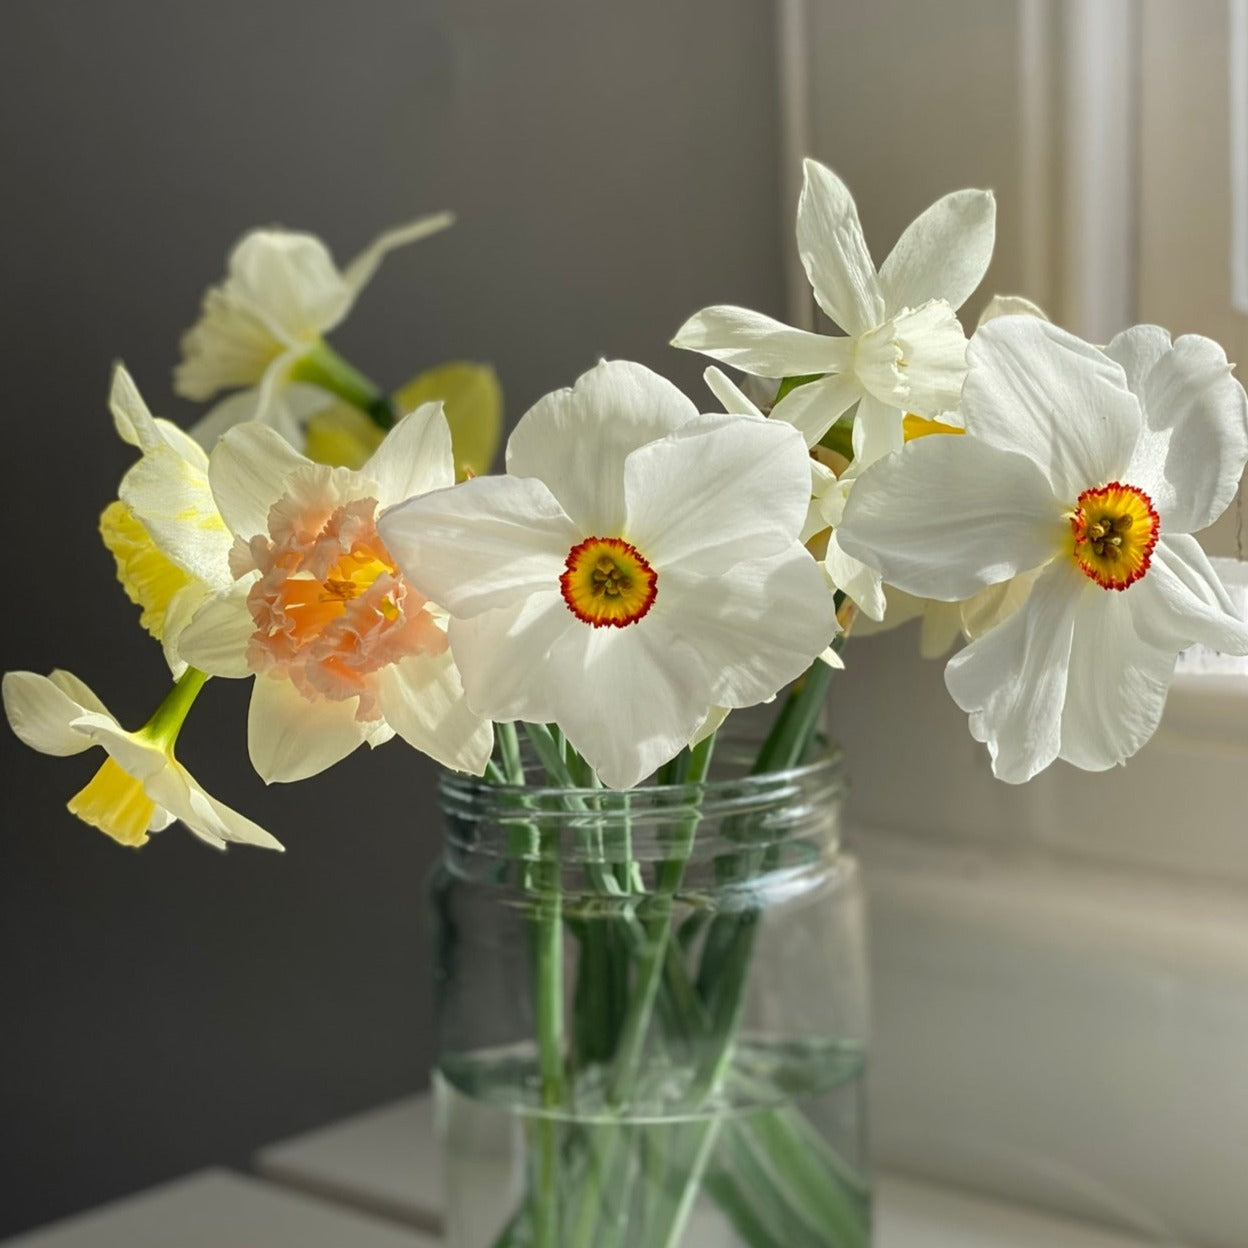 December Birth Flower Stud Earrings - Daffodil - 9kt Gold